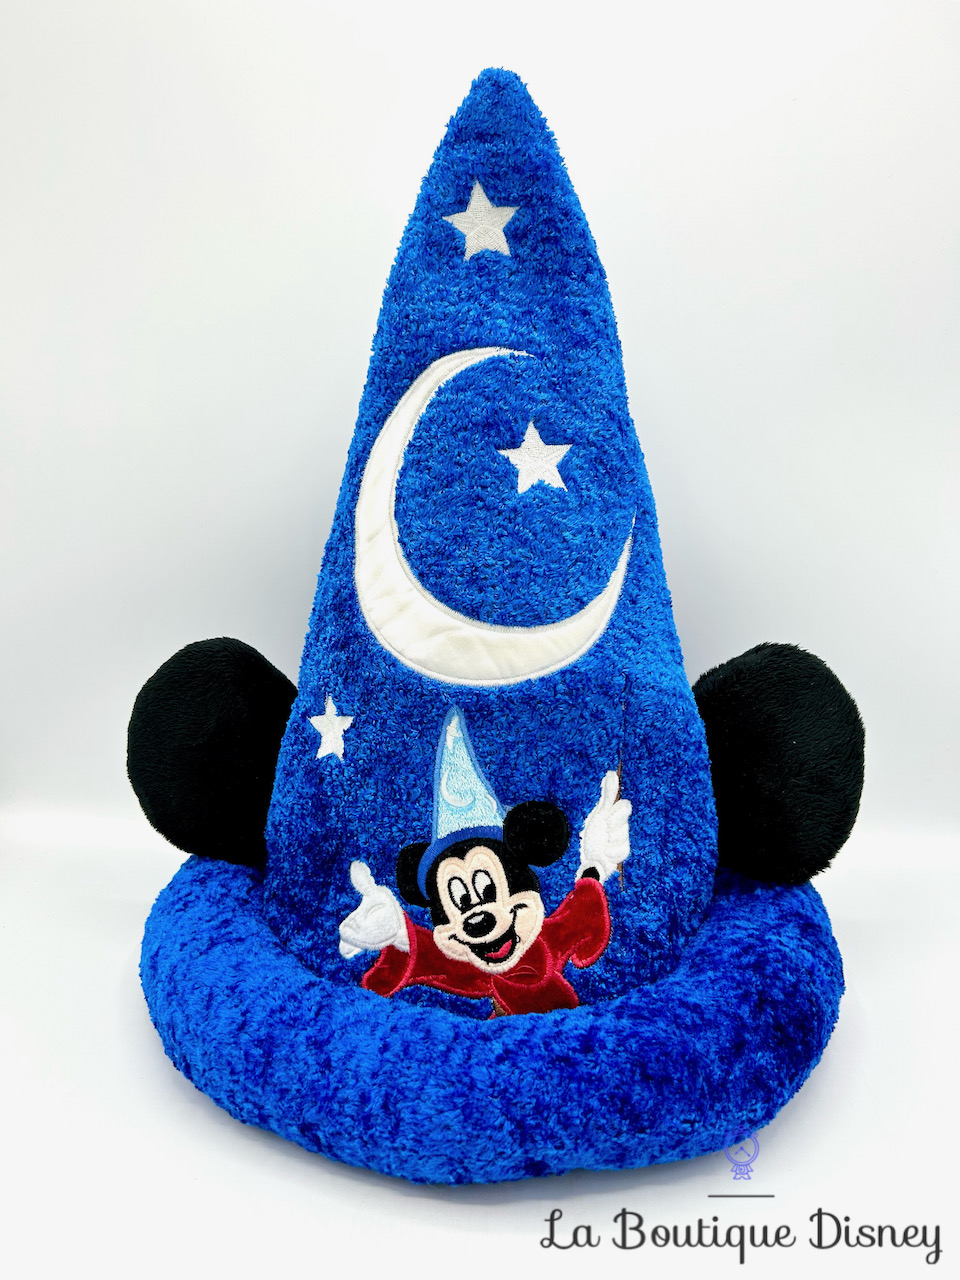 Chapeau Mickey Mouse Fantasia Disneyland Paris 2016 Disney bleu étoiles lune